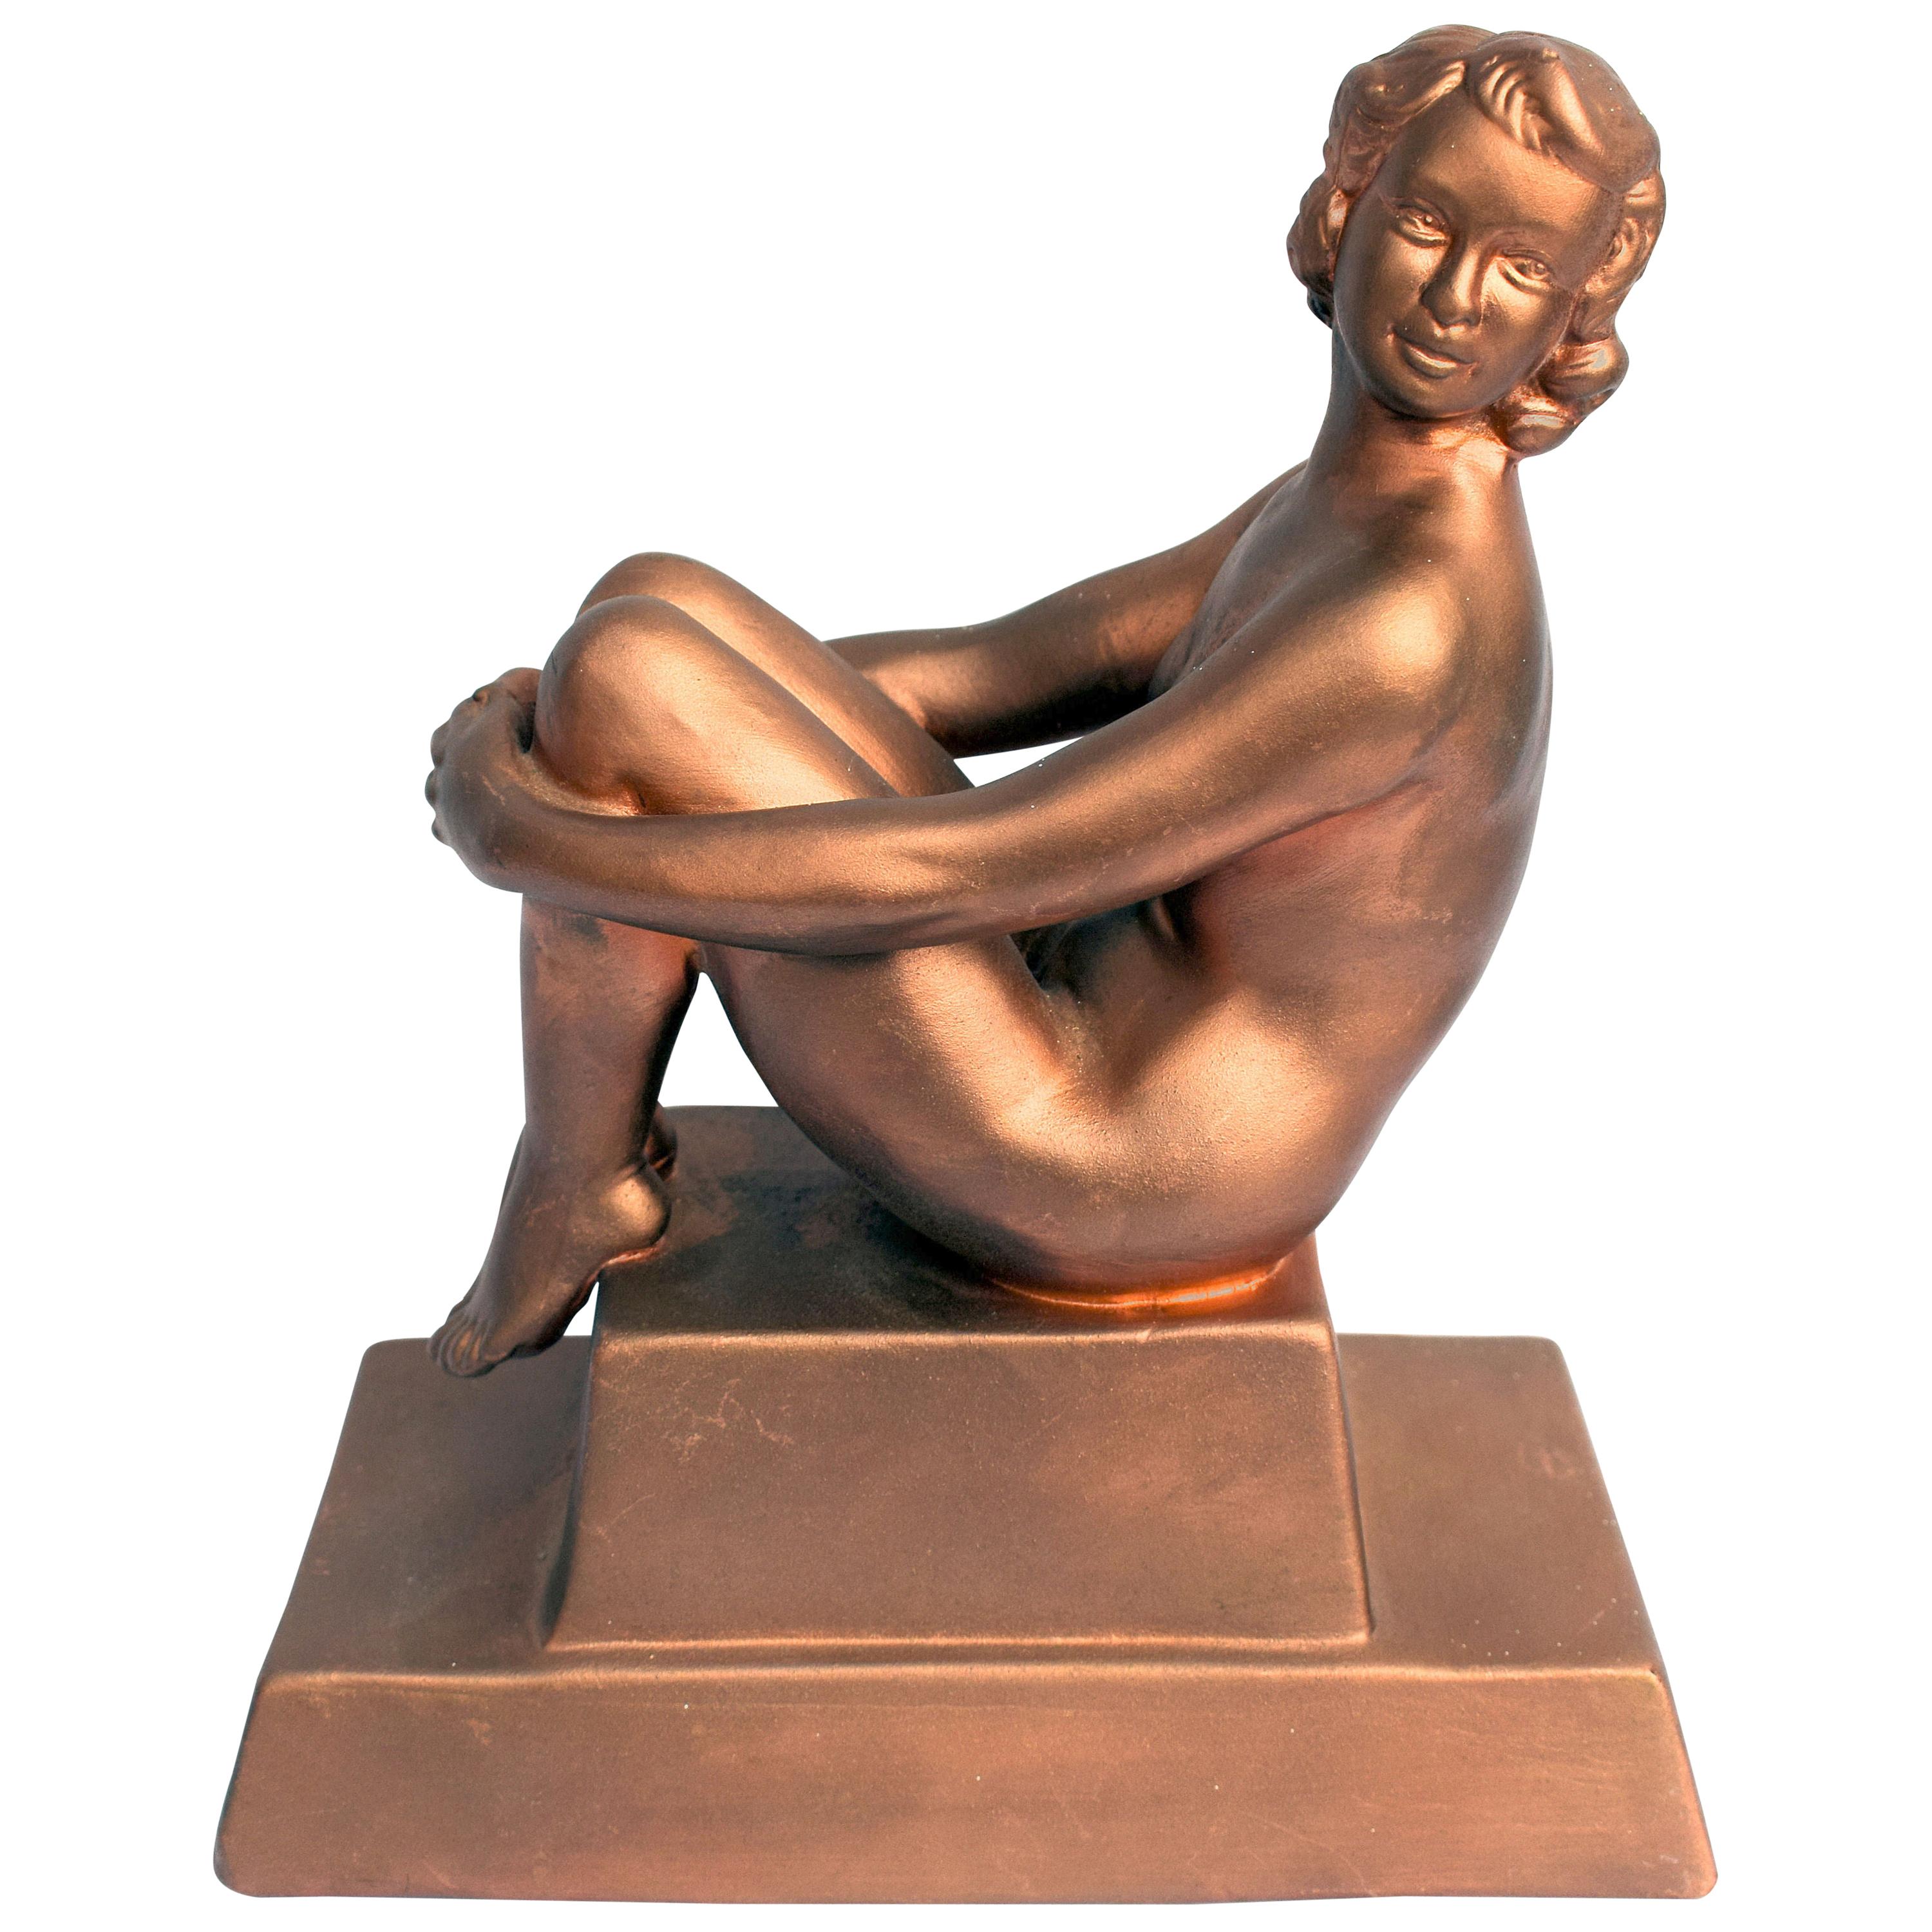 Original Art Deco Female Nude Sitting Figure, circa 1930